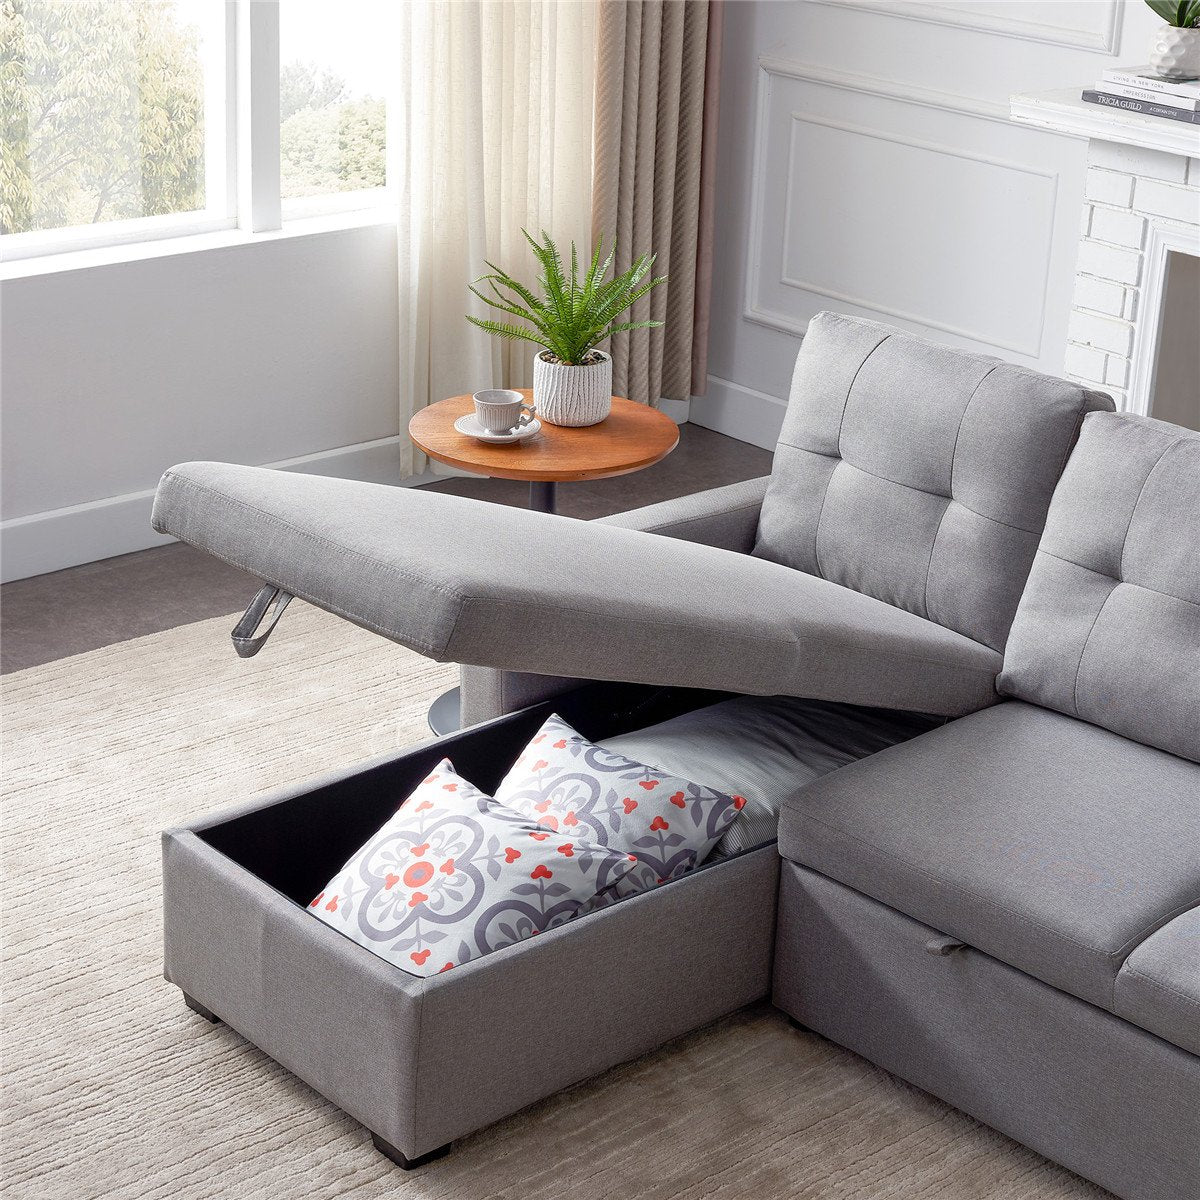 Reversible Sleeper Sectional Sofa